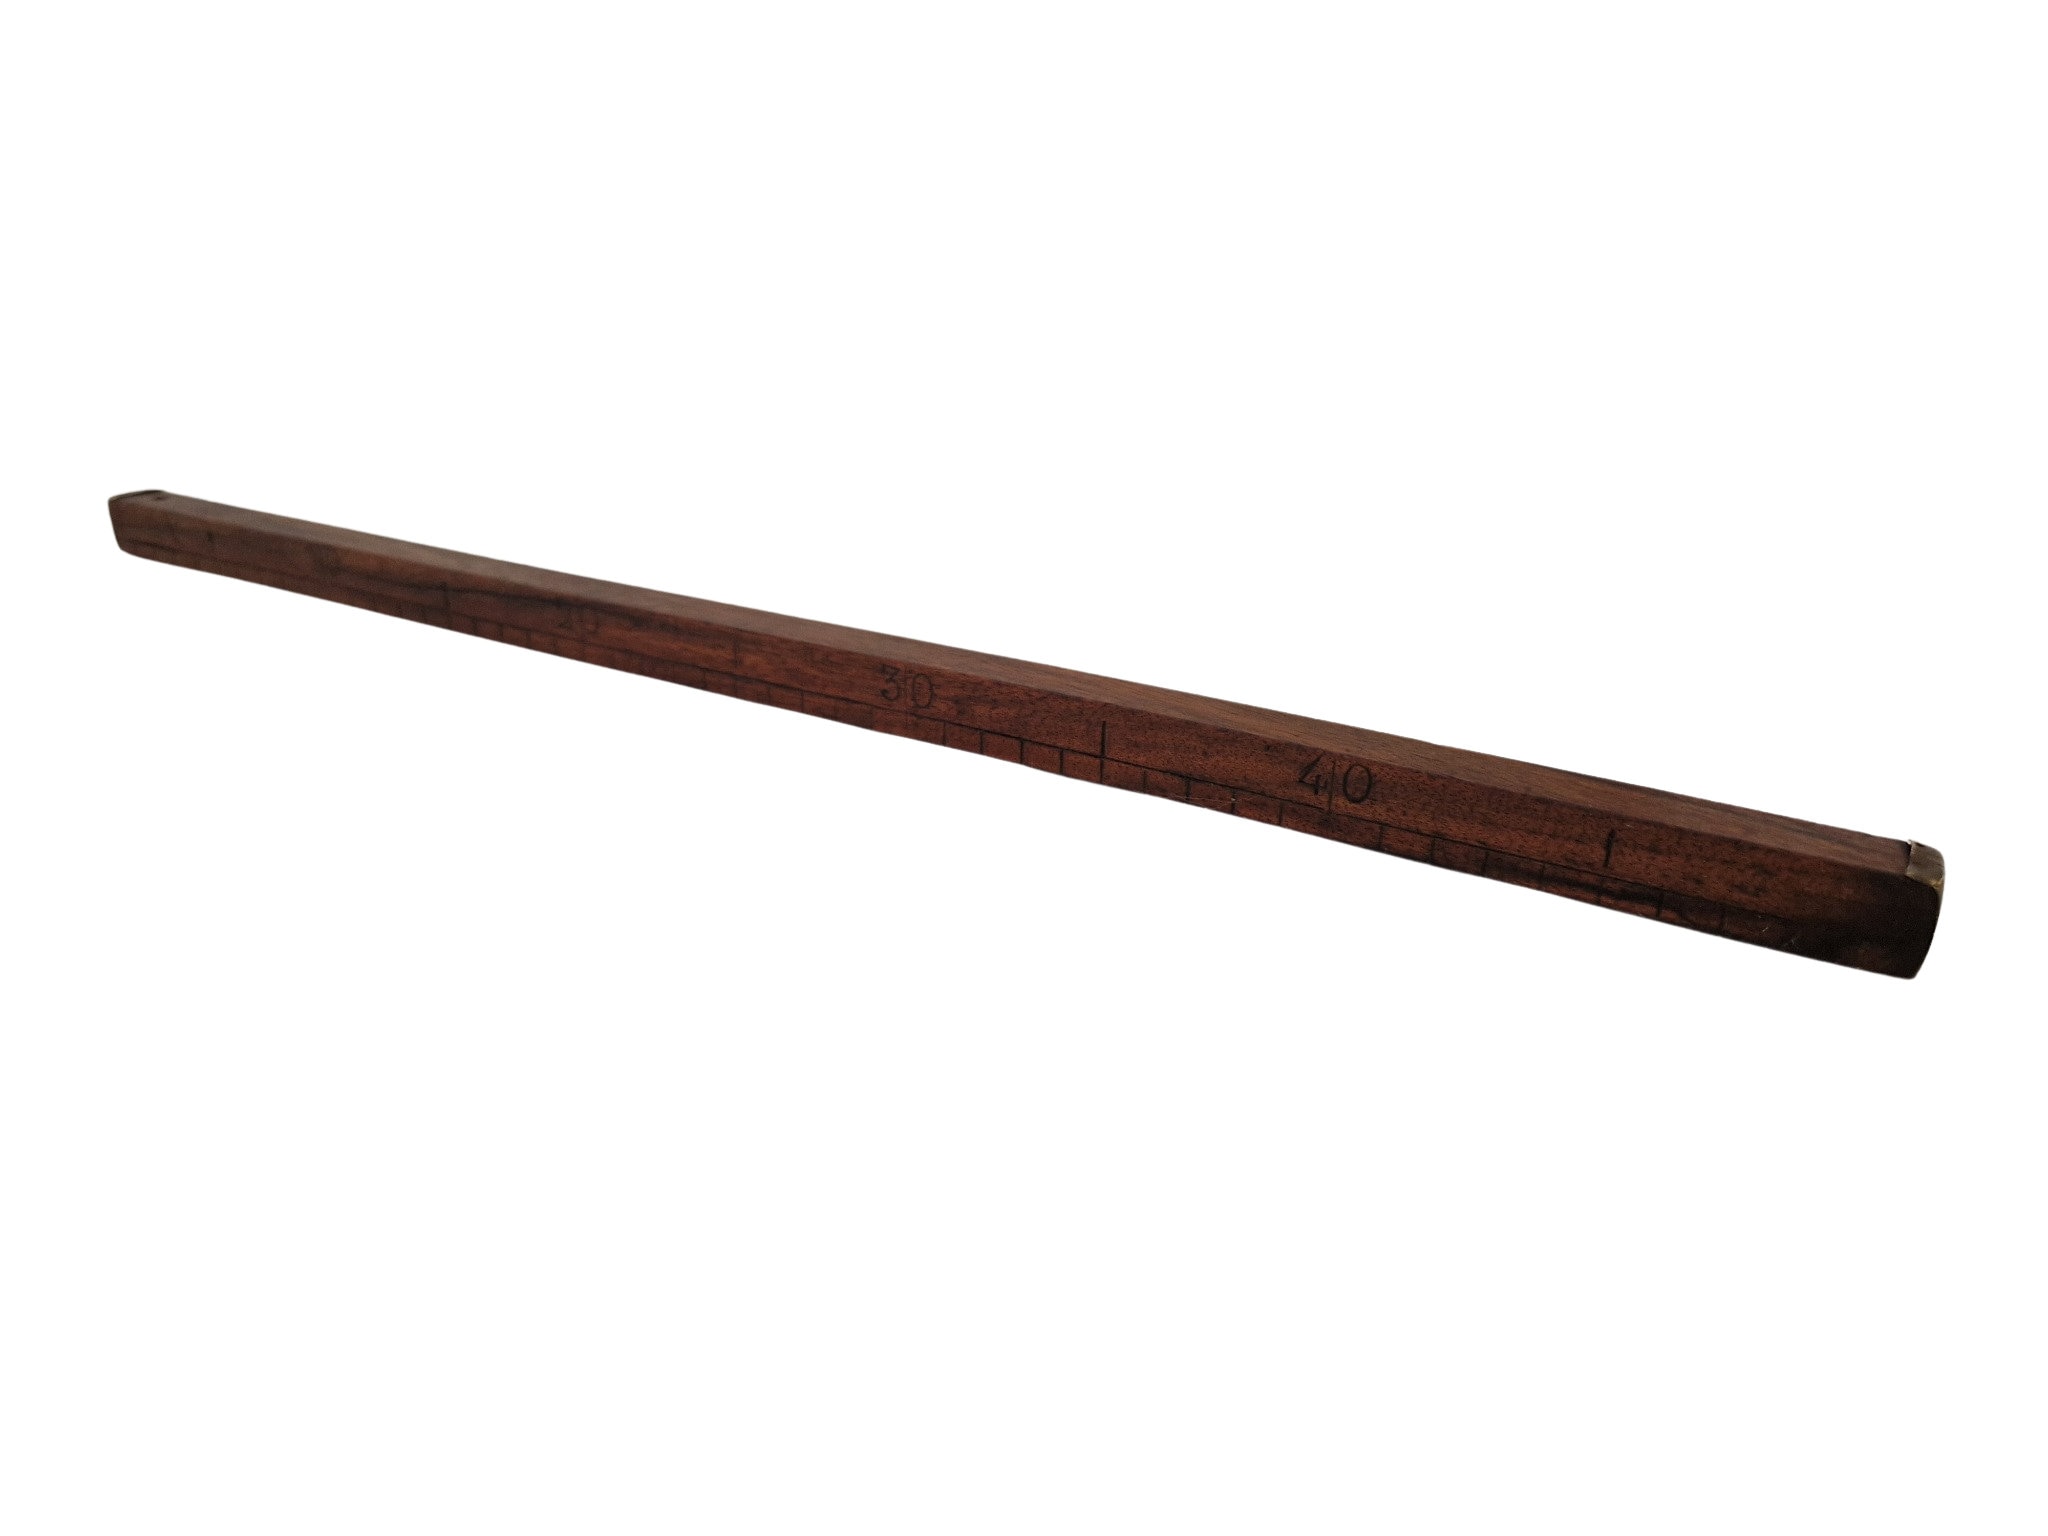 Antique French Half Meter Wooden Stick Ruler, 50 cm Wood and Brass Square  Yardstick